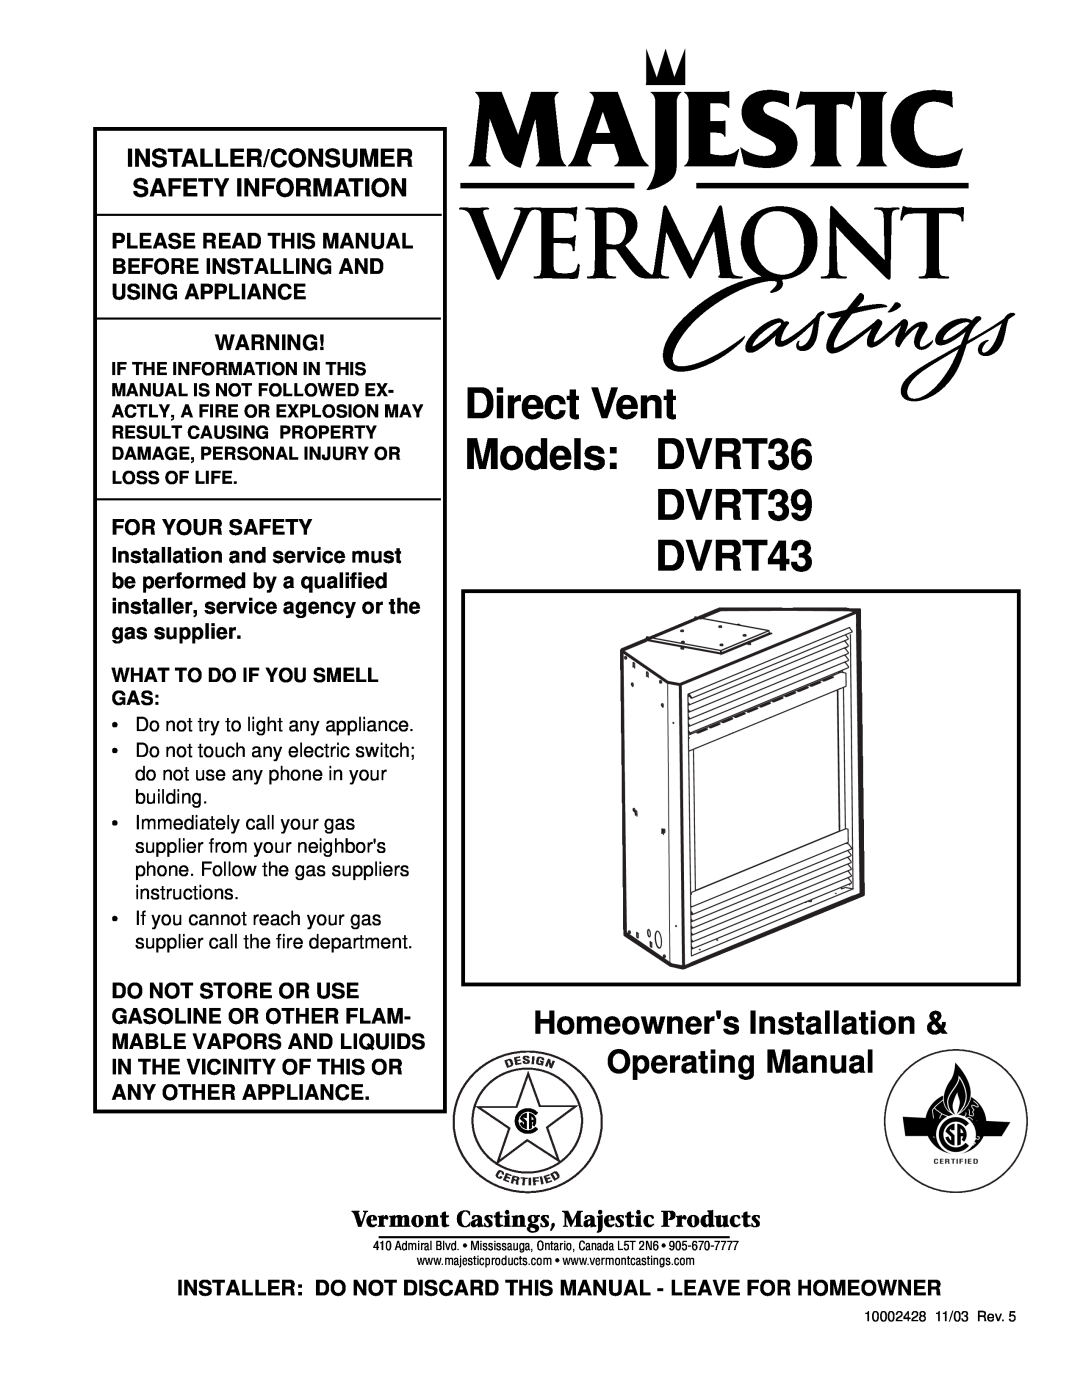 Vermont Casting manual Direct Vent Models DVRT36 DVRT39 DVRT43, Homeowners Installation, Operating Manual 